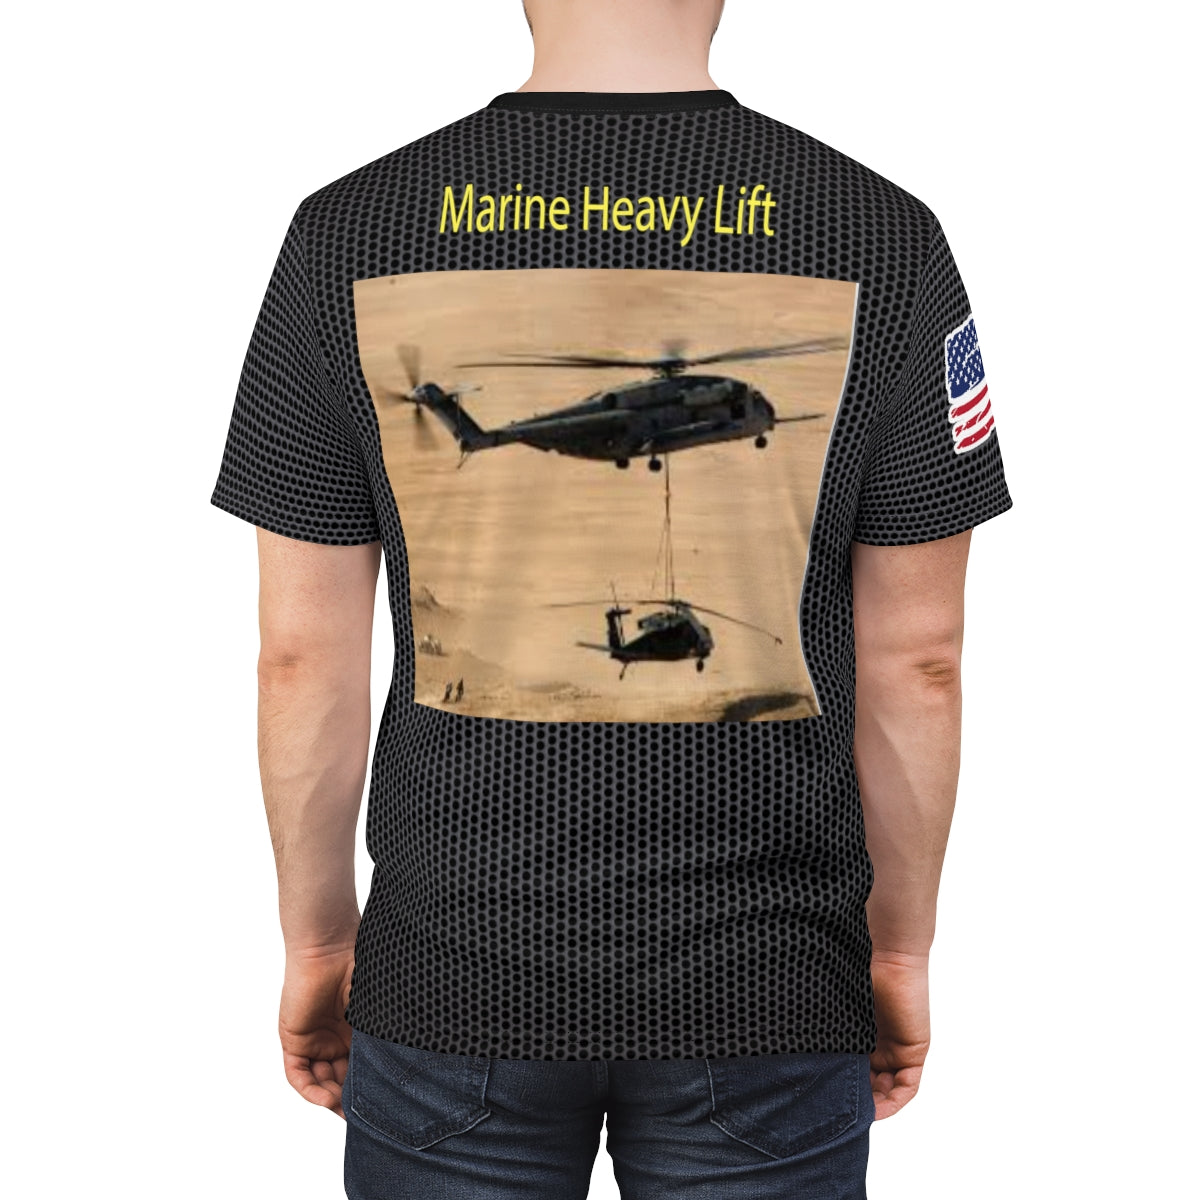 Heavy lift HMH-465 Black Premium Shirt